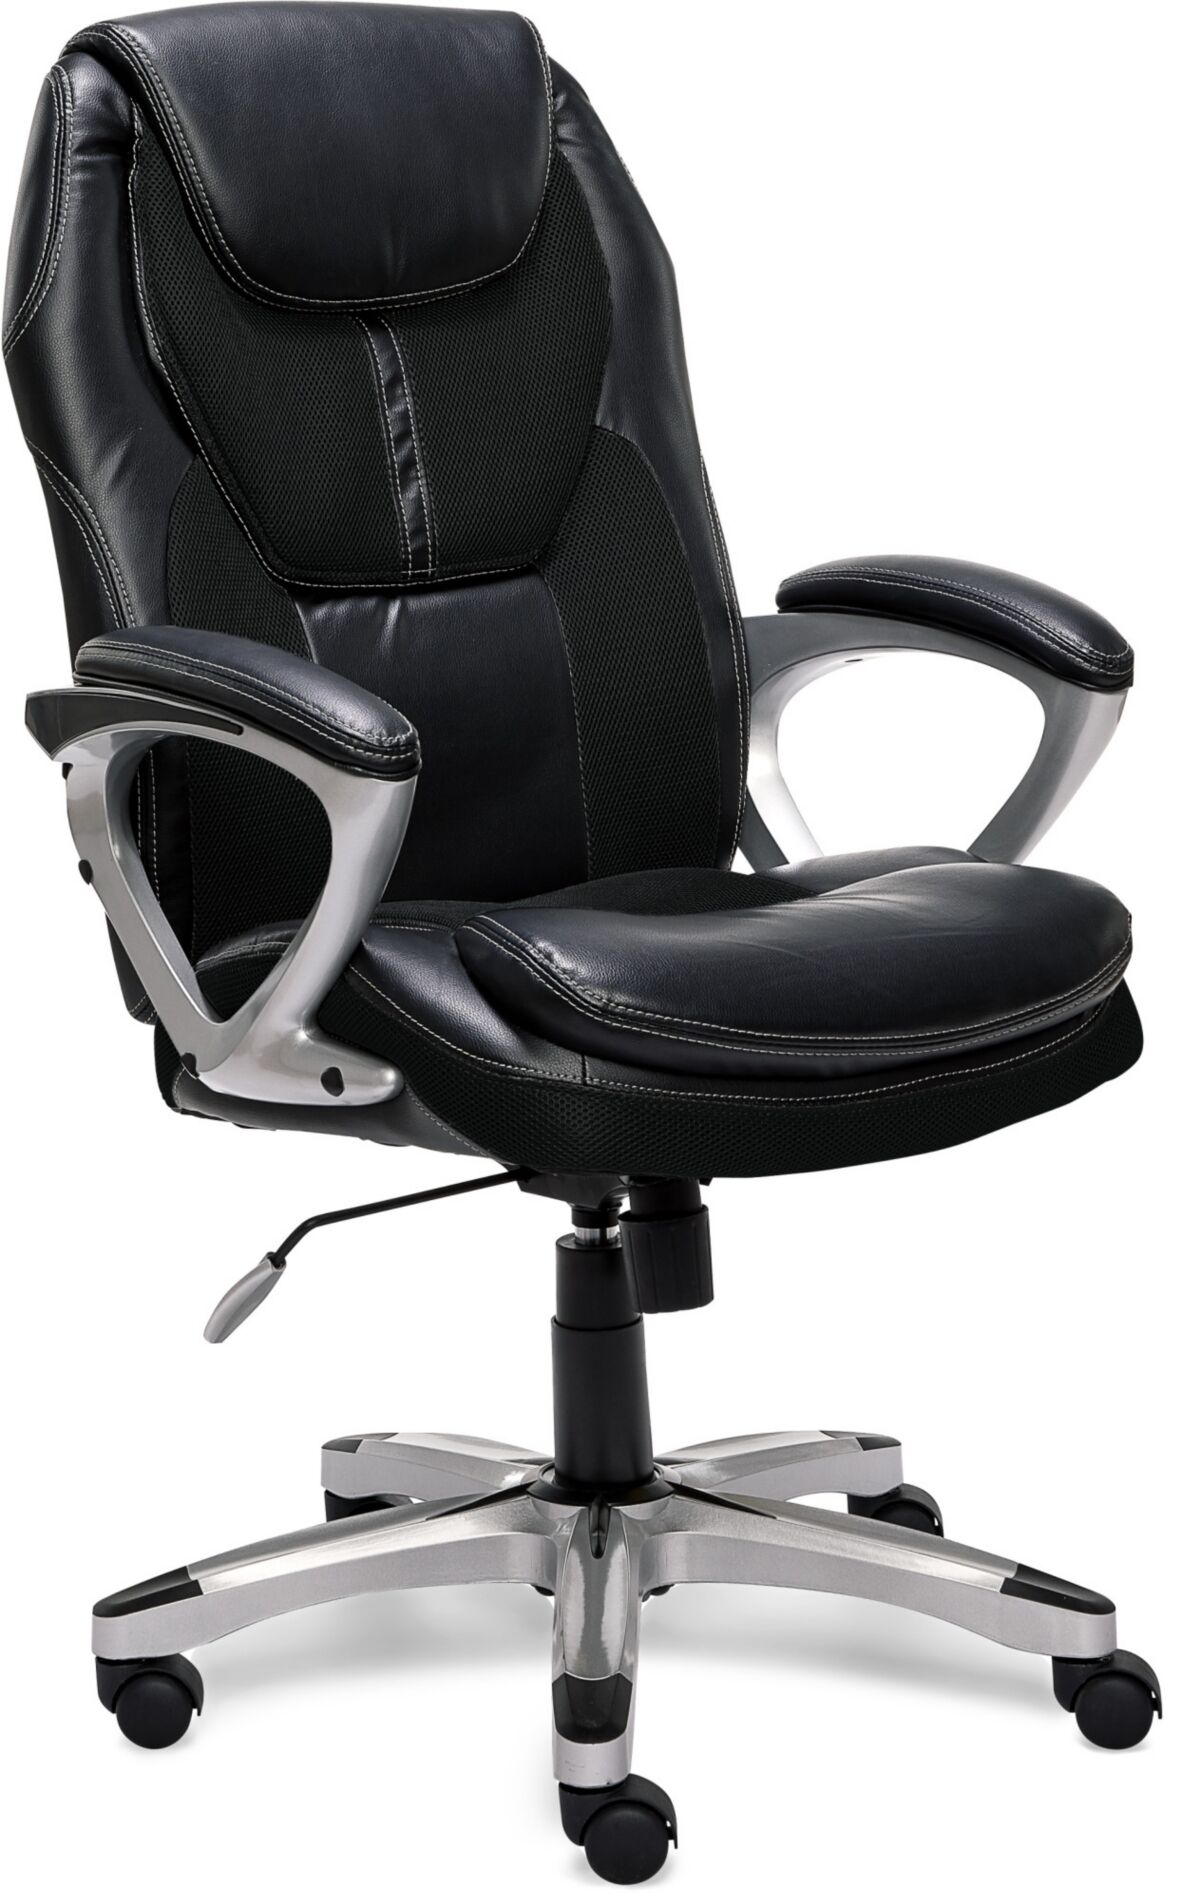 Serta Works Executive Office Chair - Black